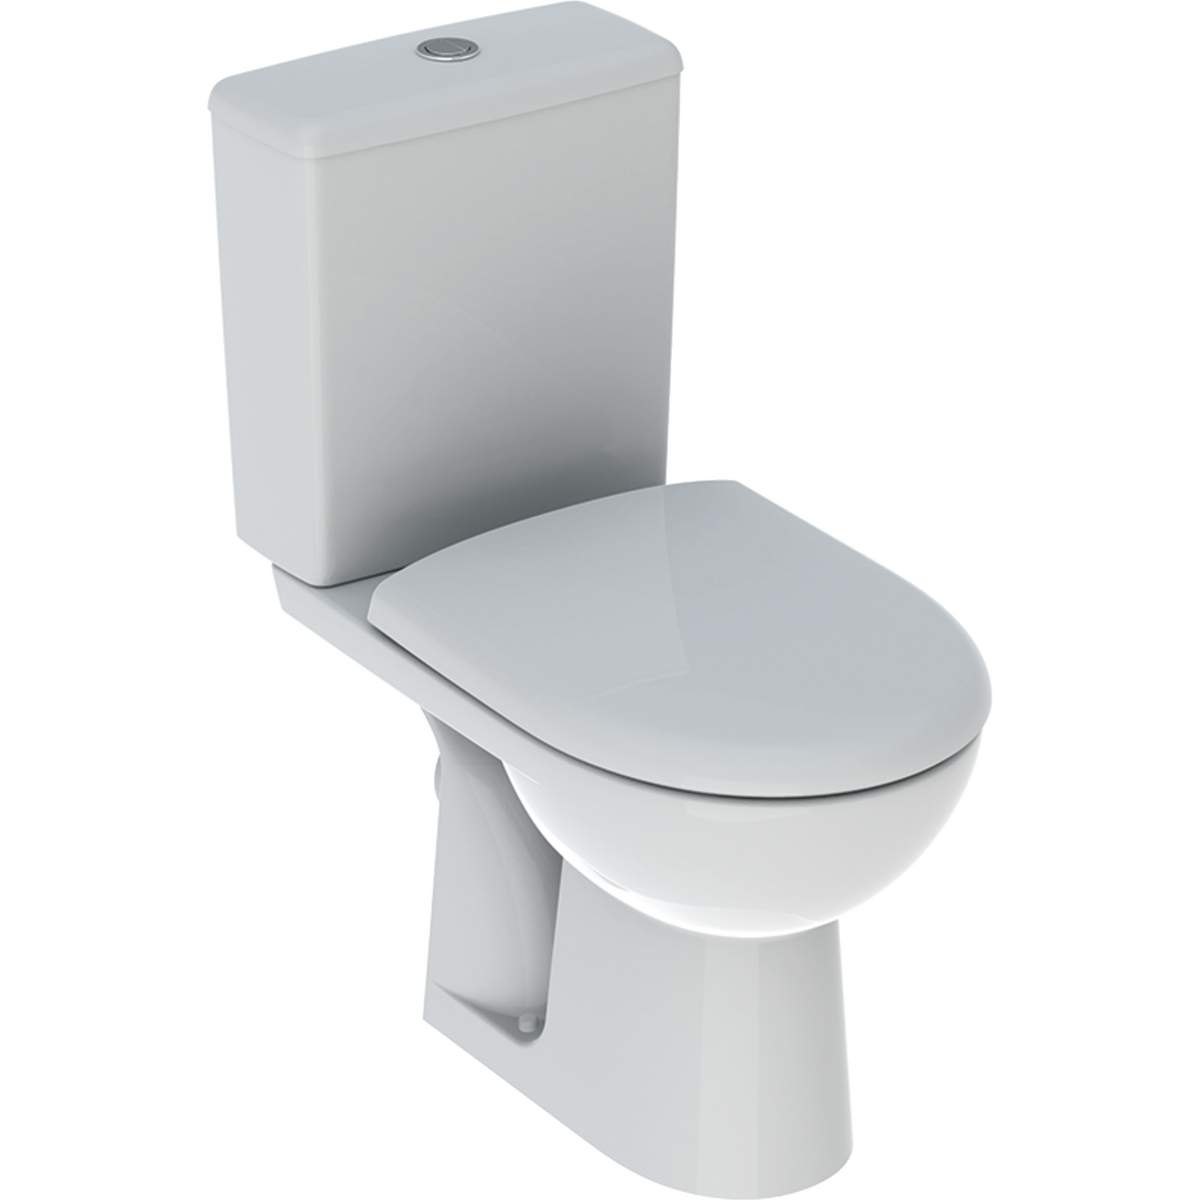  Geberit Renova Rimfree floor toilet package, horizontal outlet, with flap